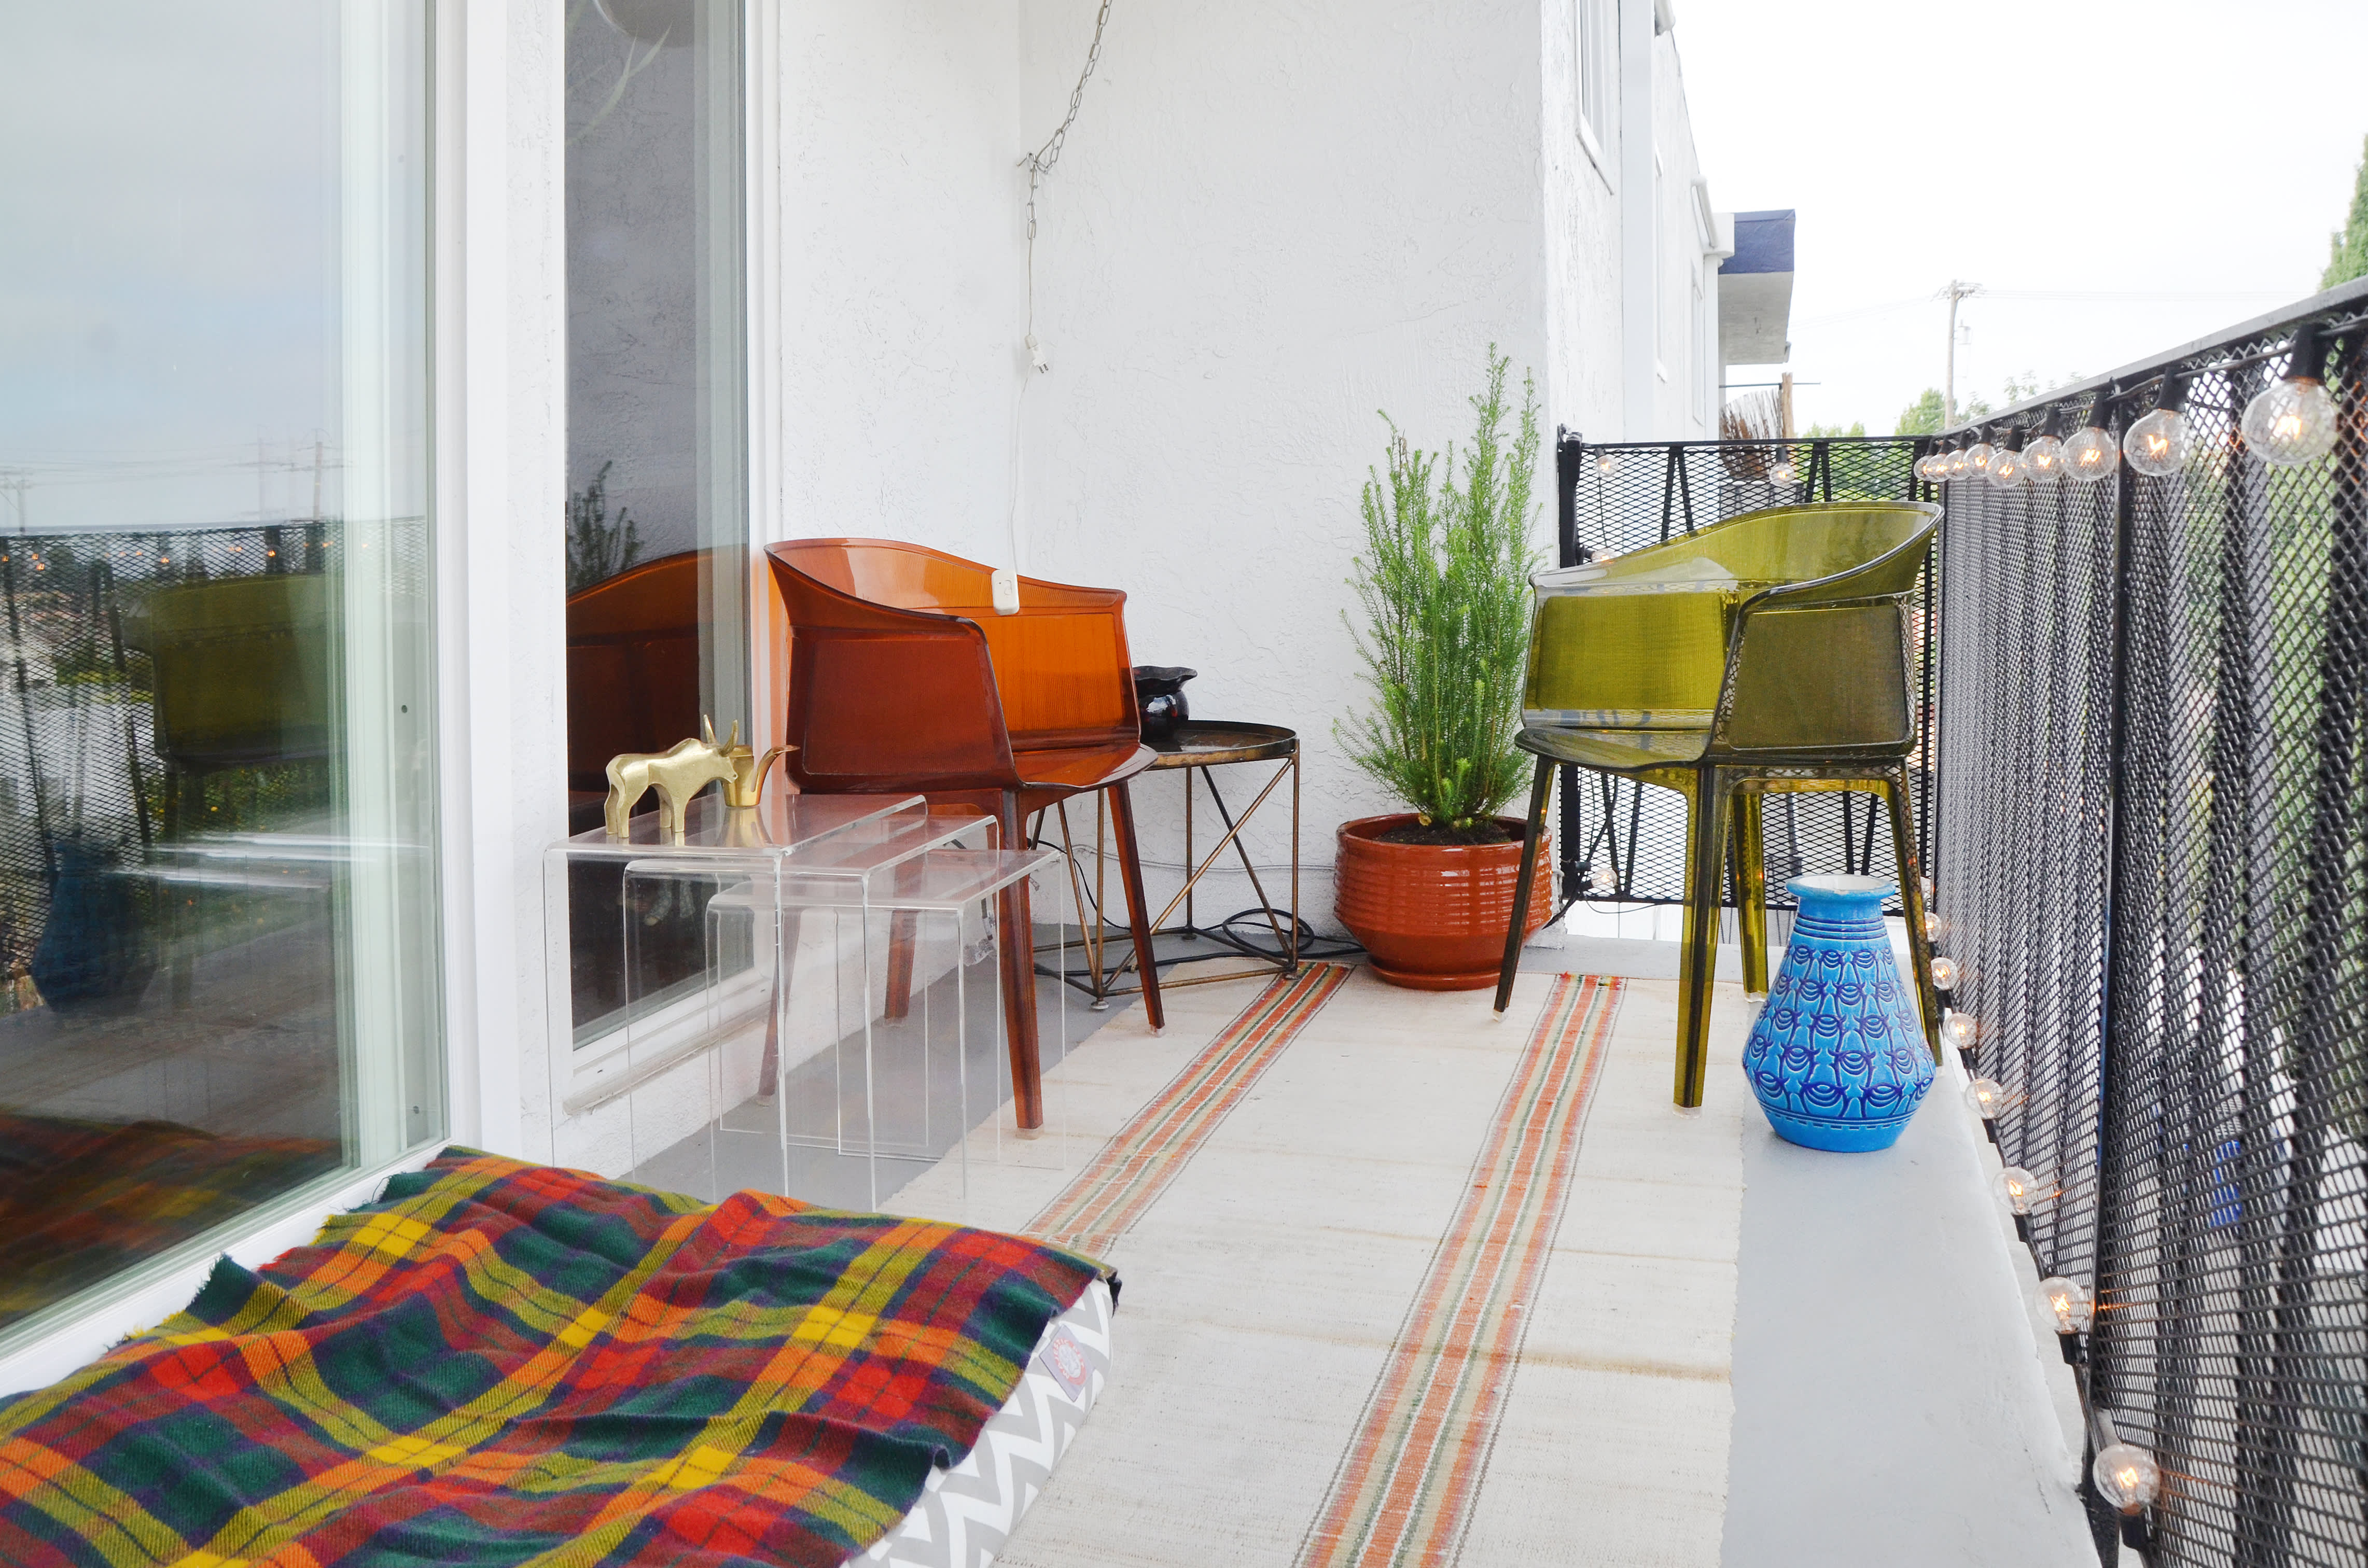 20 Fun Balcony Ideas - How to Decorate a Small Balcony  Apartment